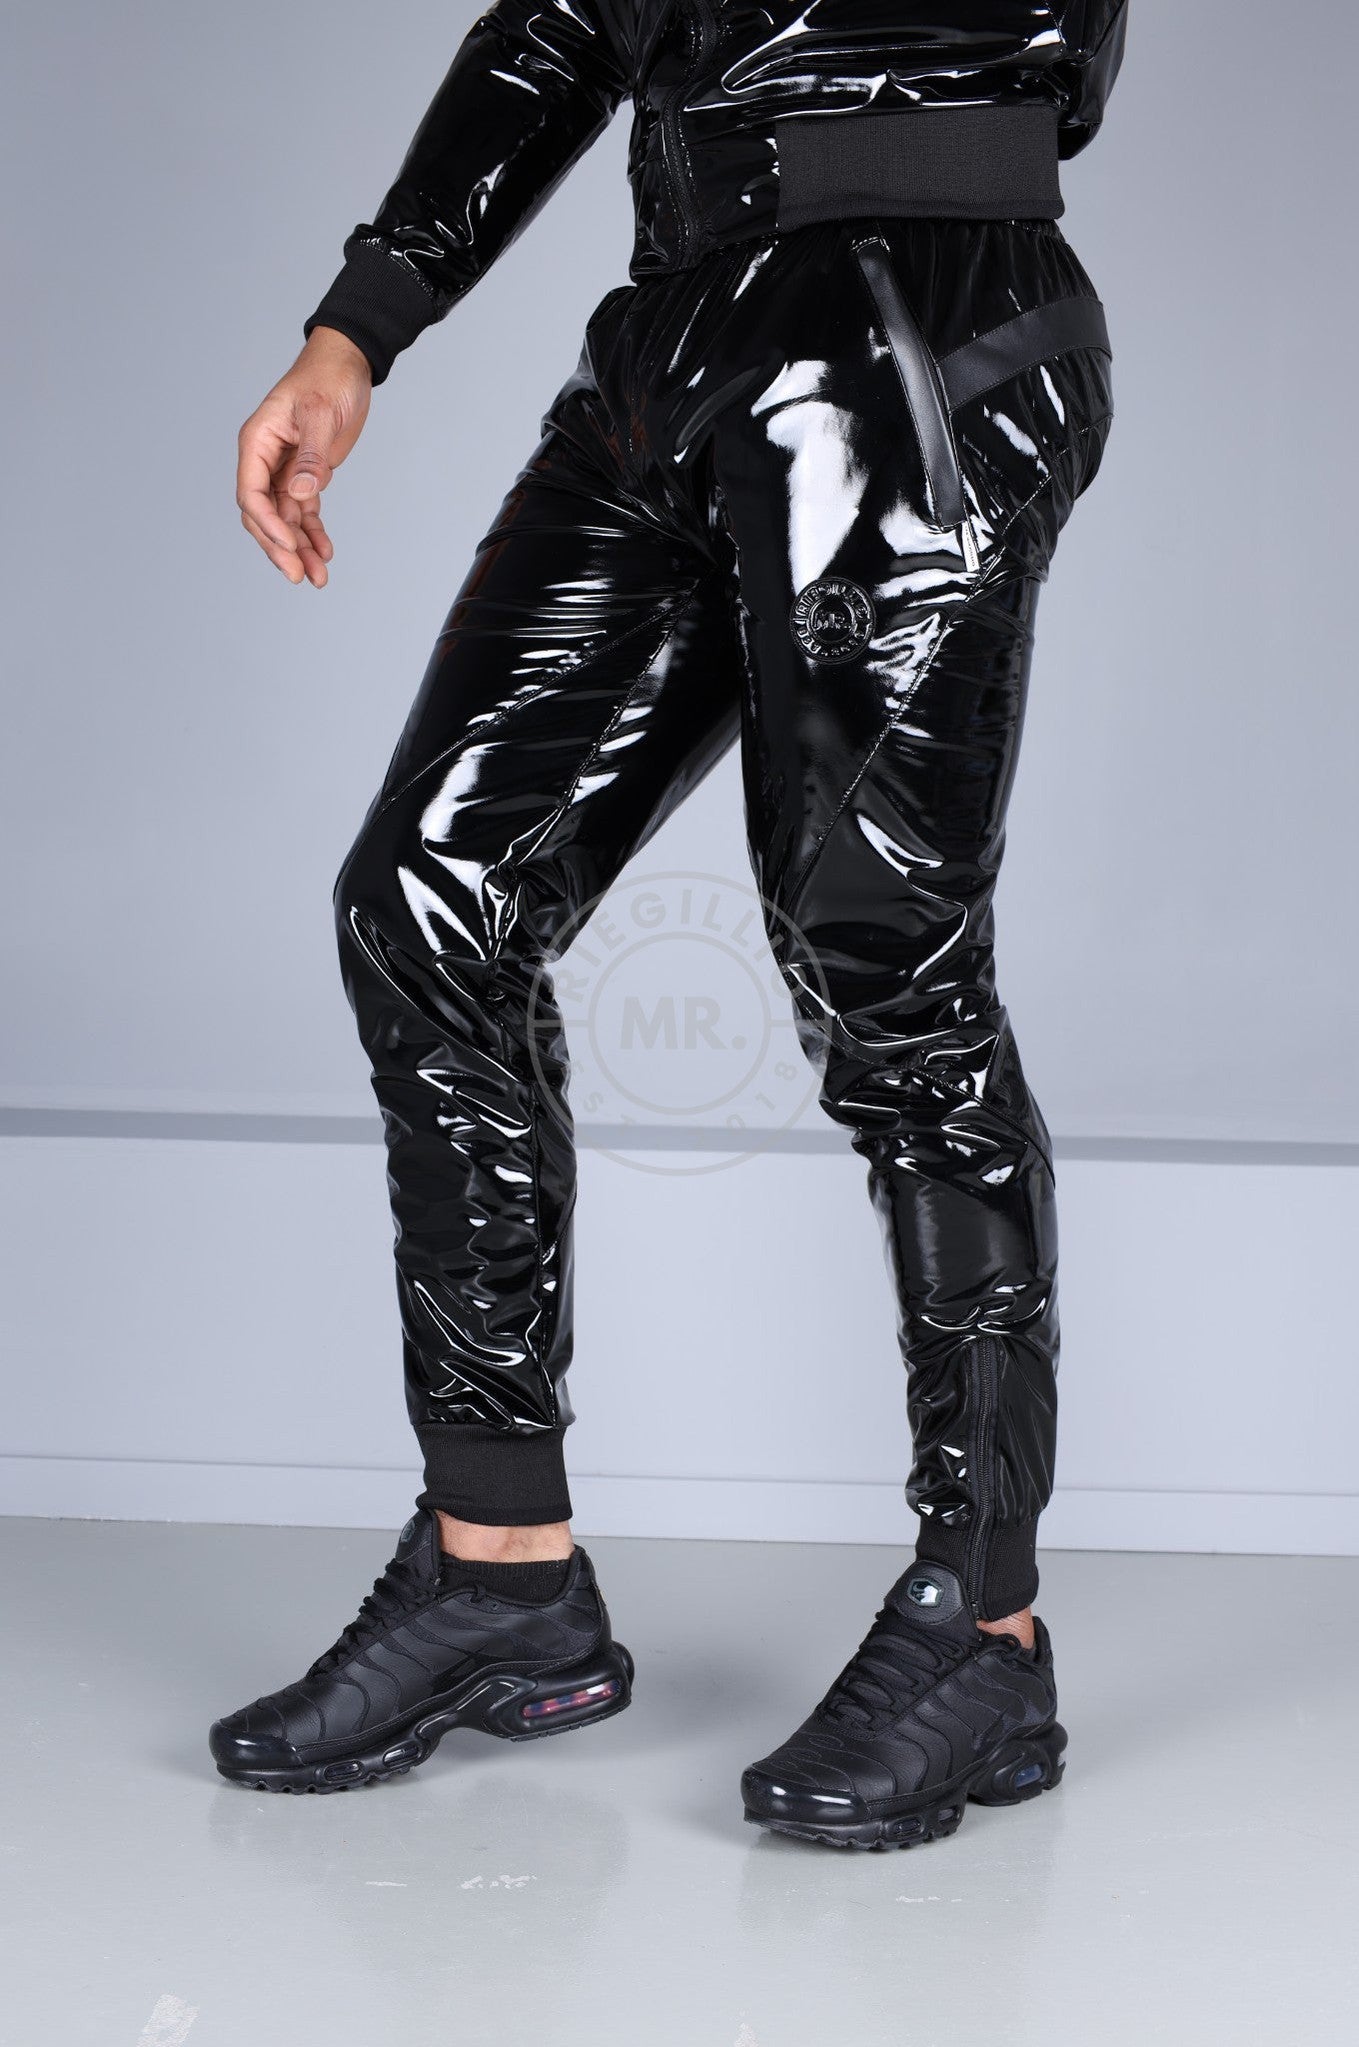 PVC 24 Tracksuit Pants - Black at MR. Riegillio